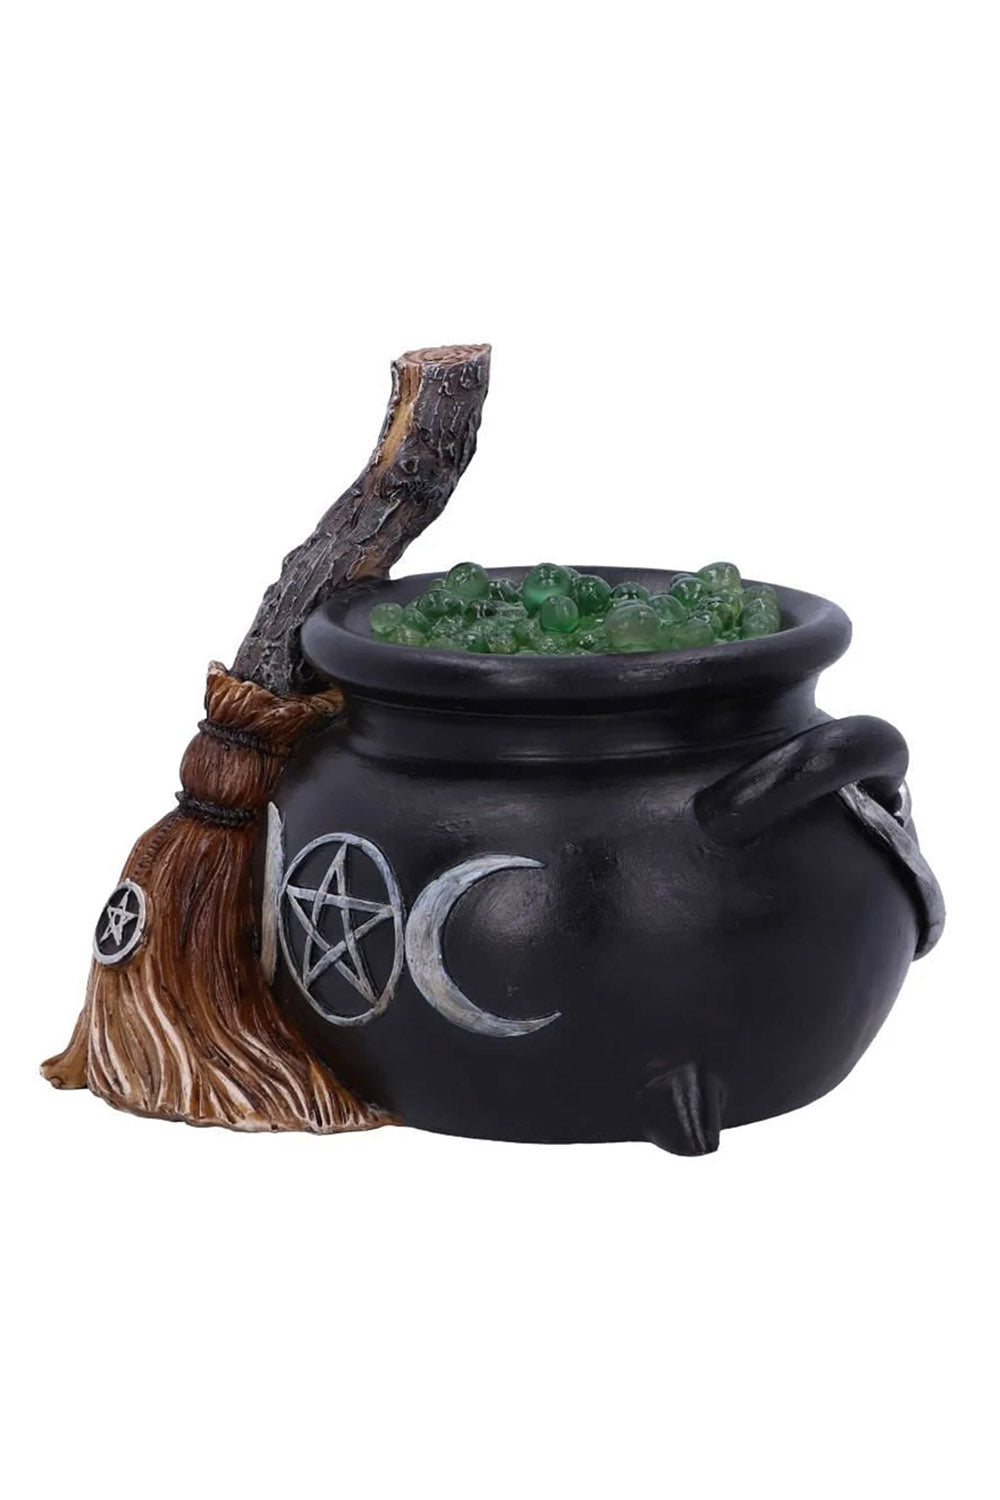 Cauldron with Broom